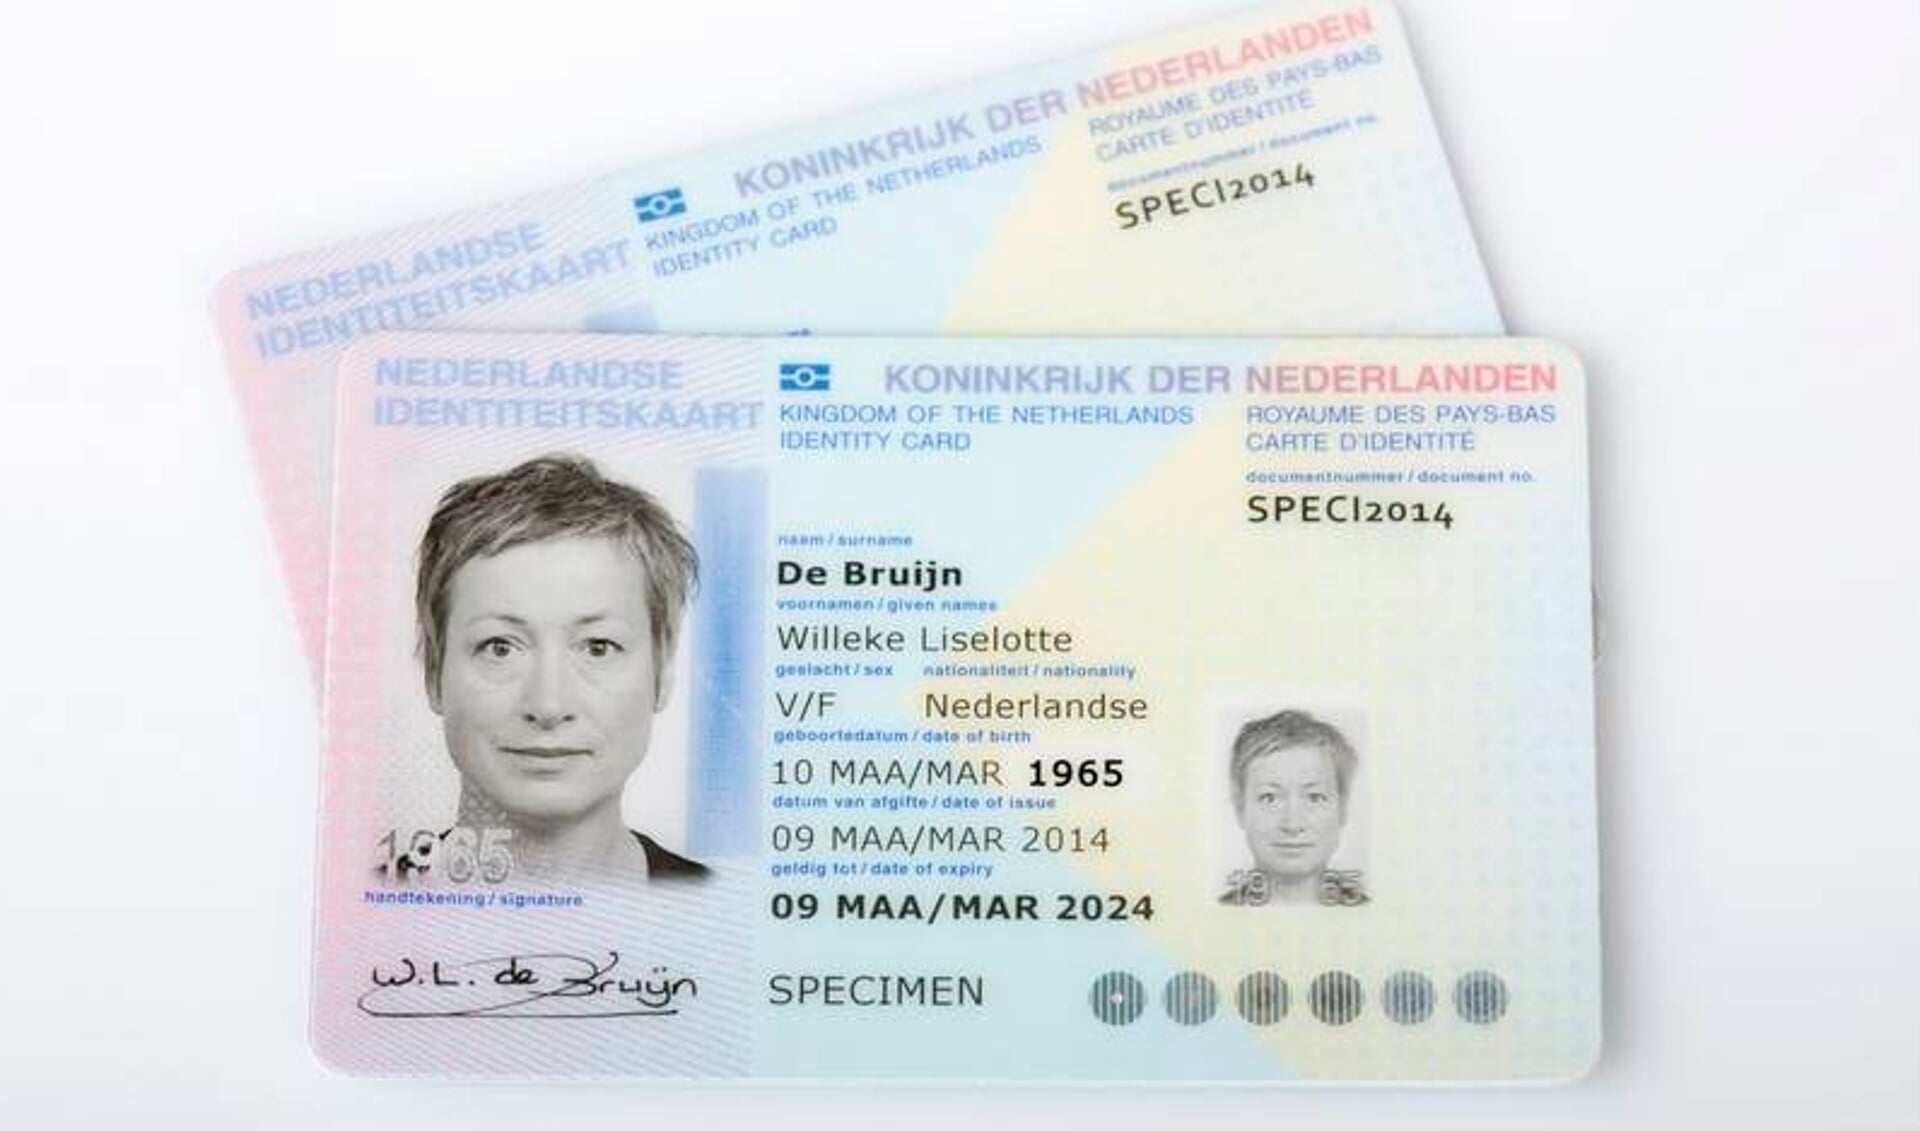 De Nederlandse identiteitskaart.